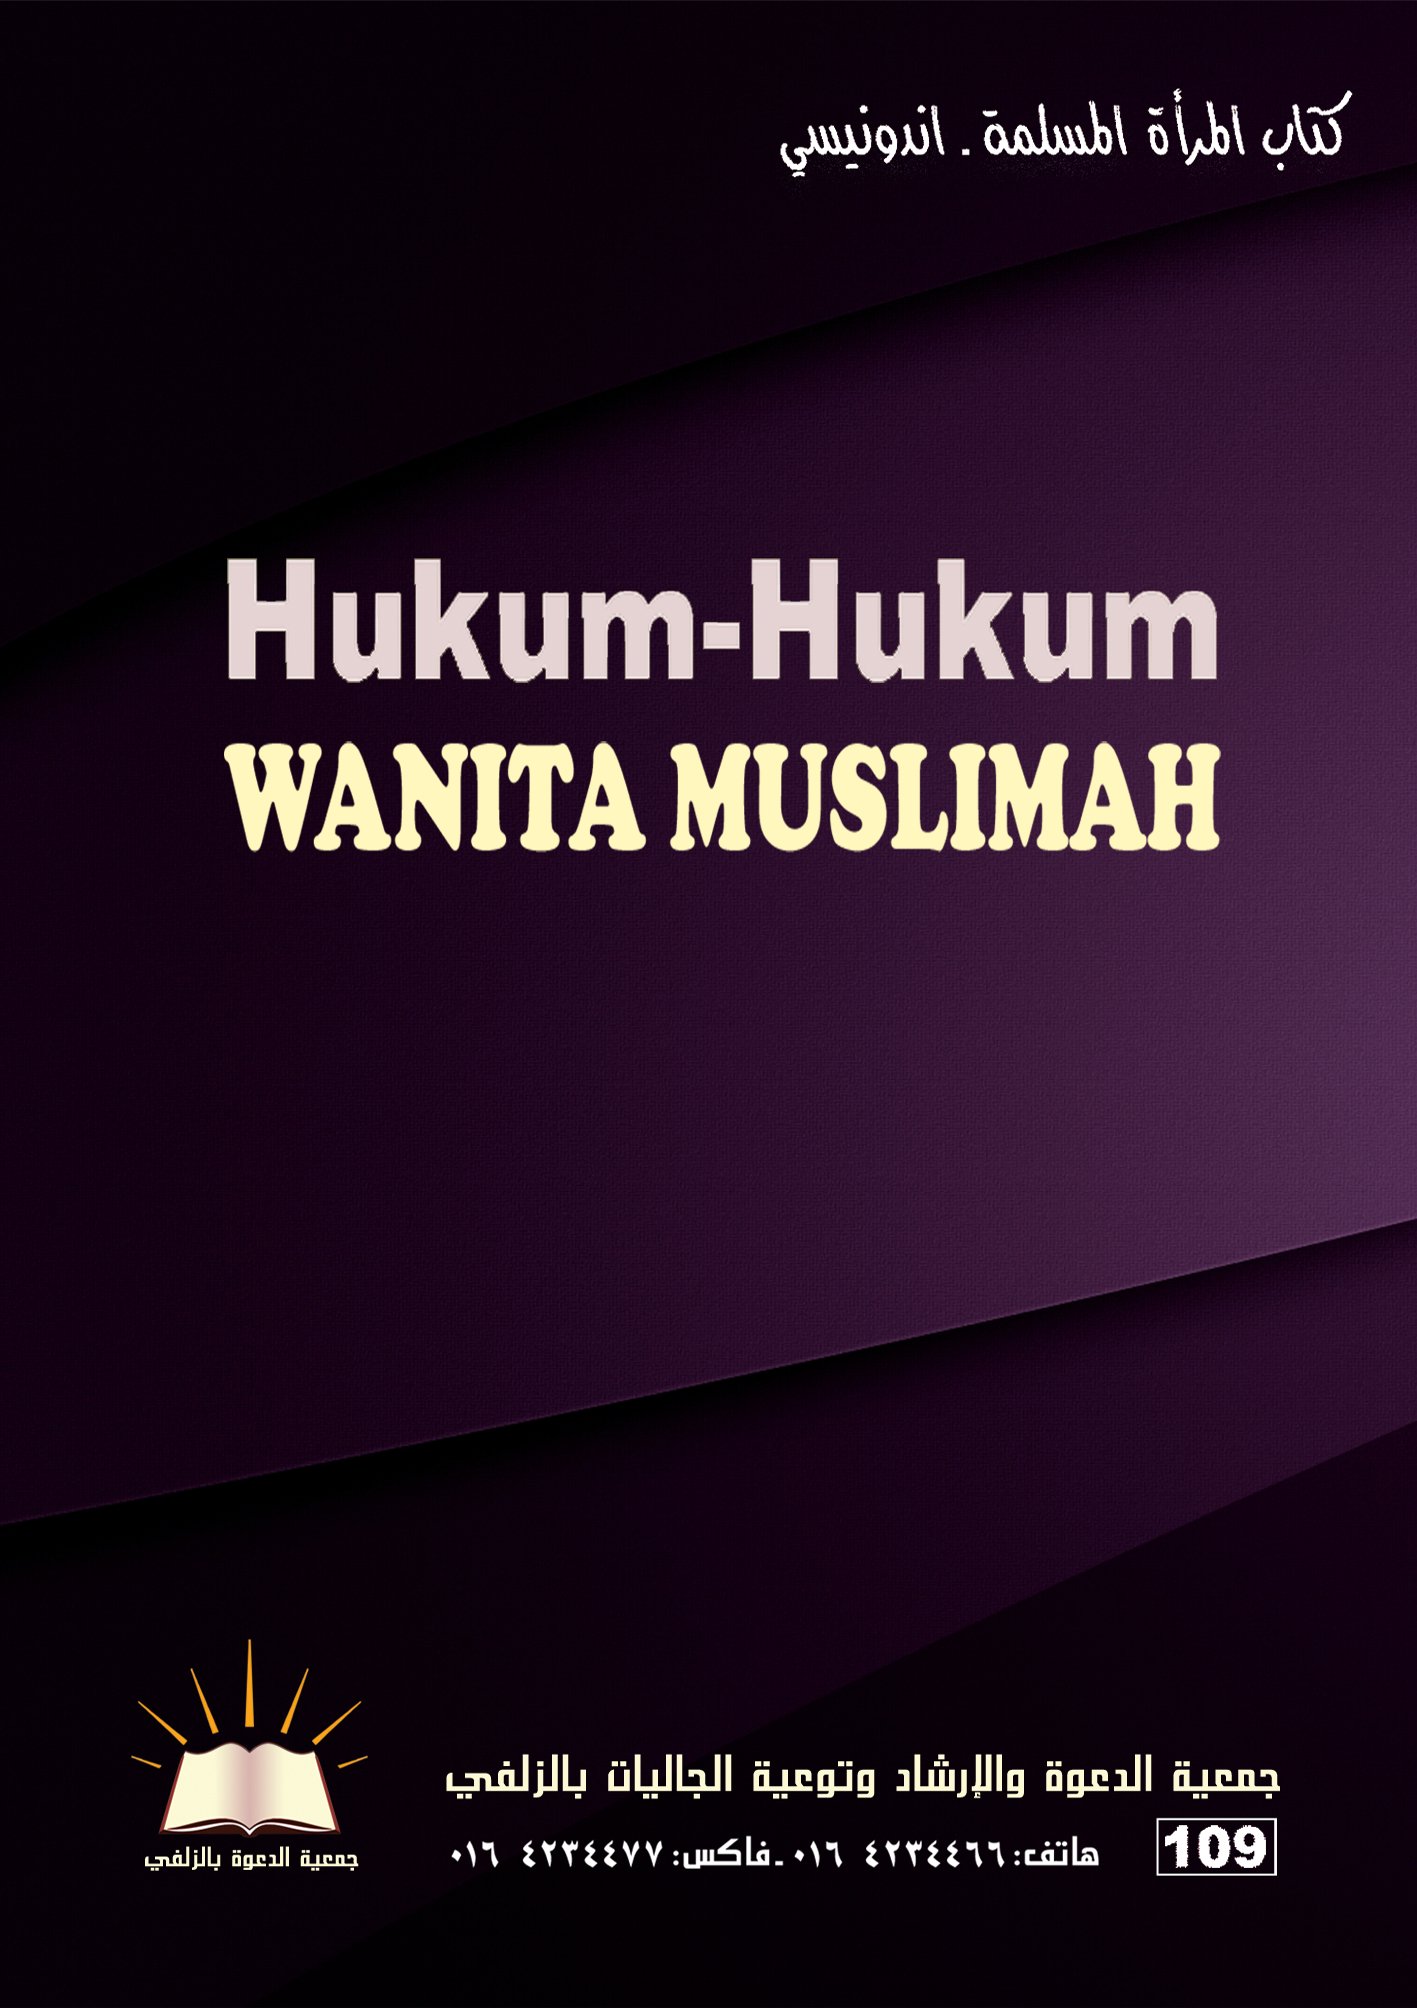 HUKUM-HUKUM WANITA MUSLIMAH - كتاب المرأة المسلمة